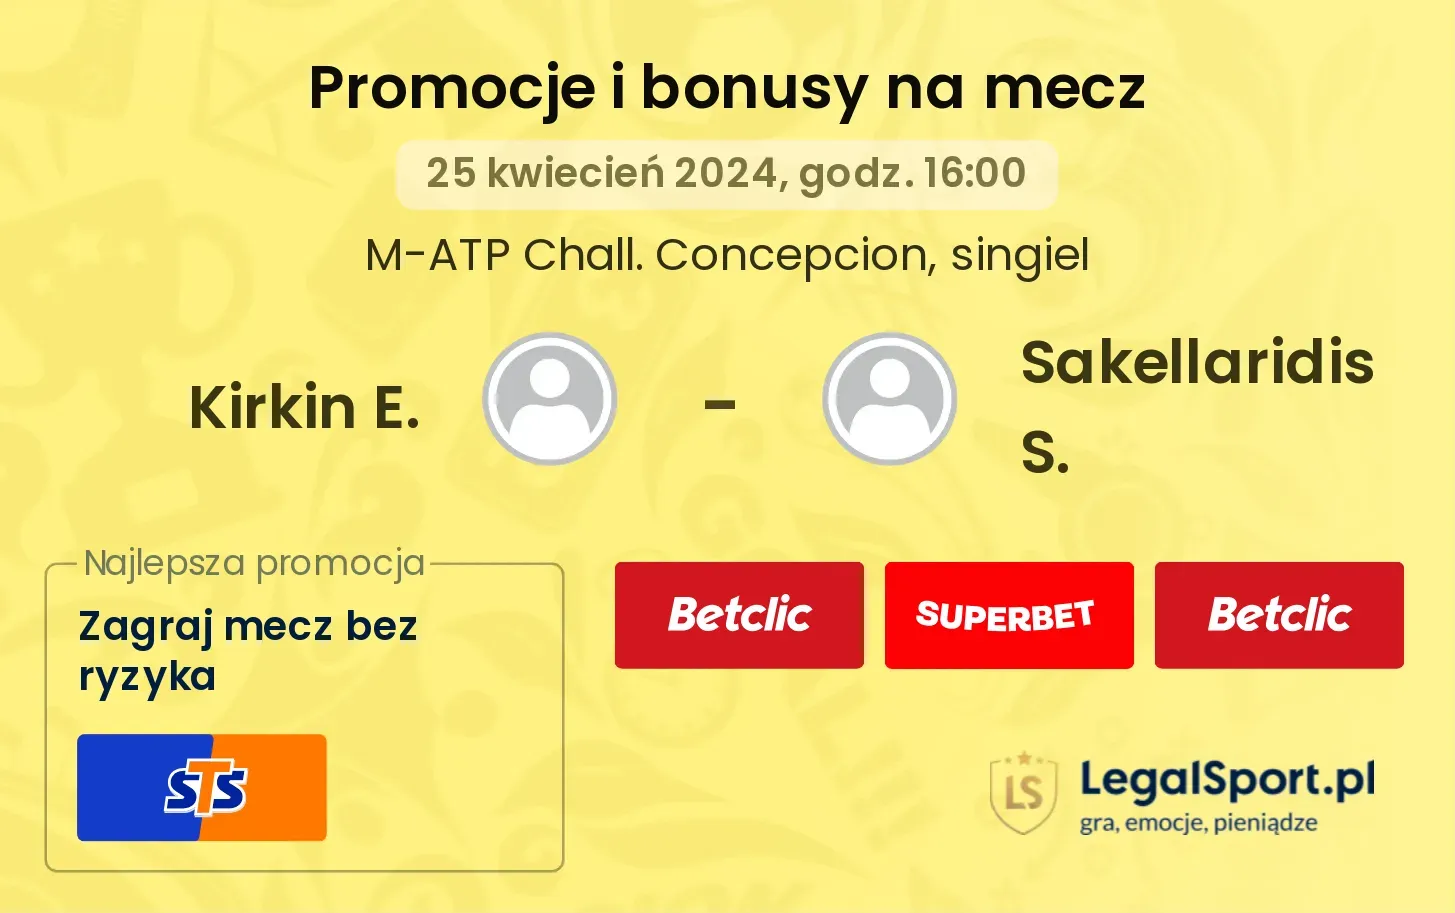 Kirkin E. - Sakellaridis S. promocje bonusy na mecz